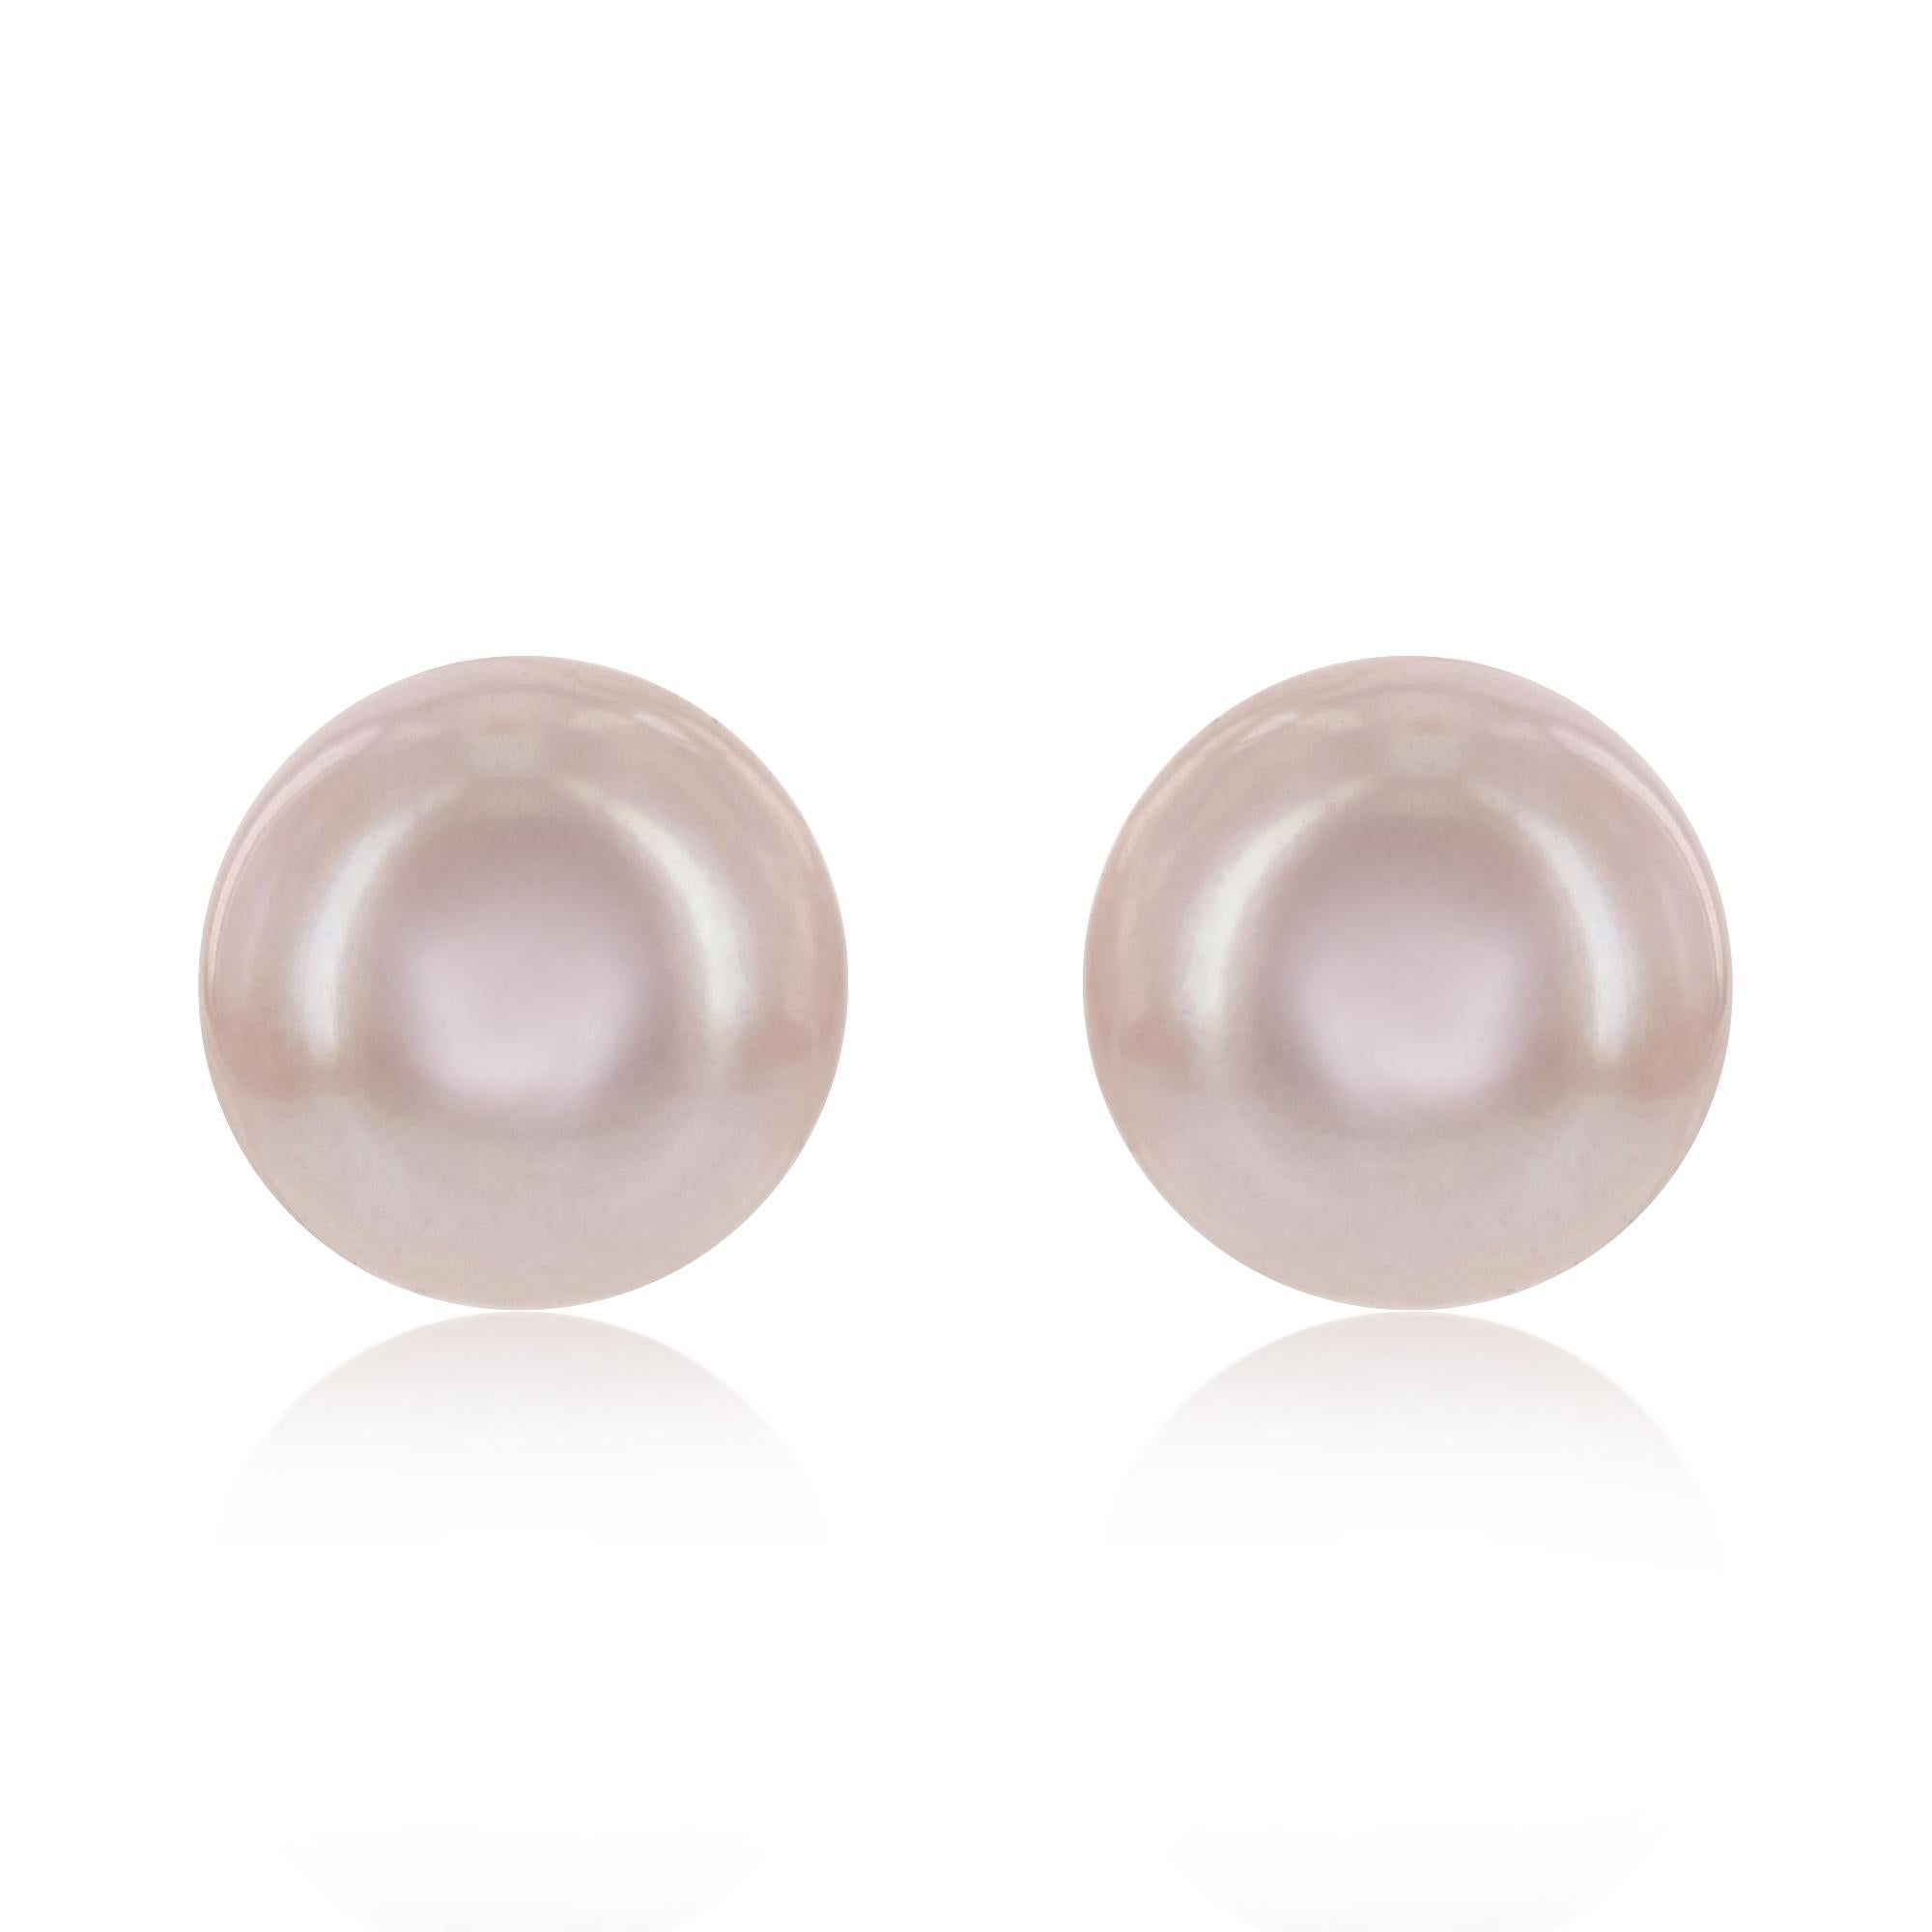 8.5 mm pearl earrings